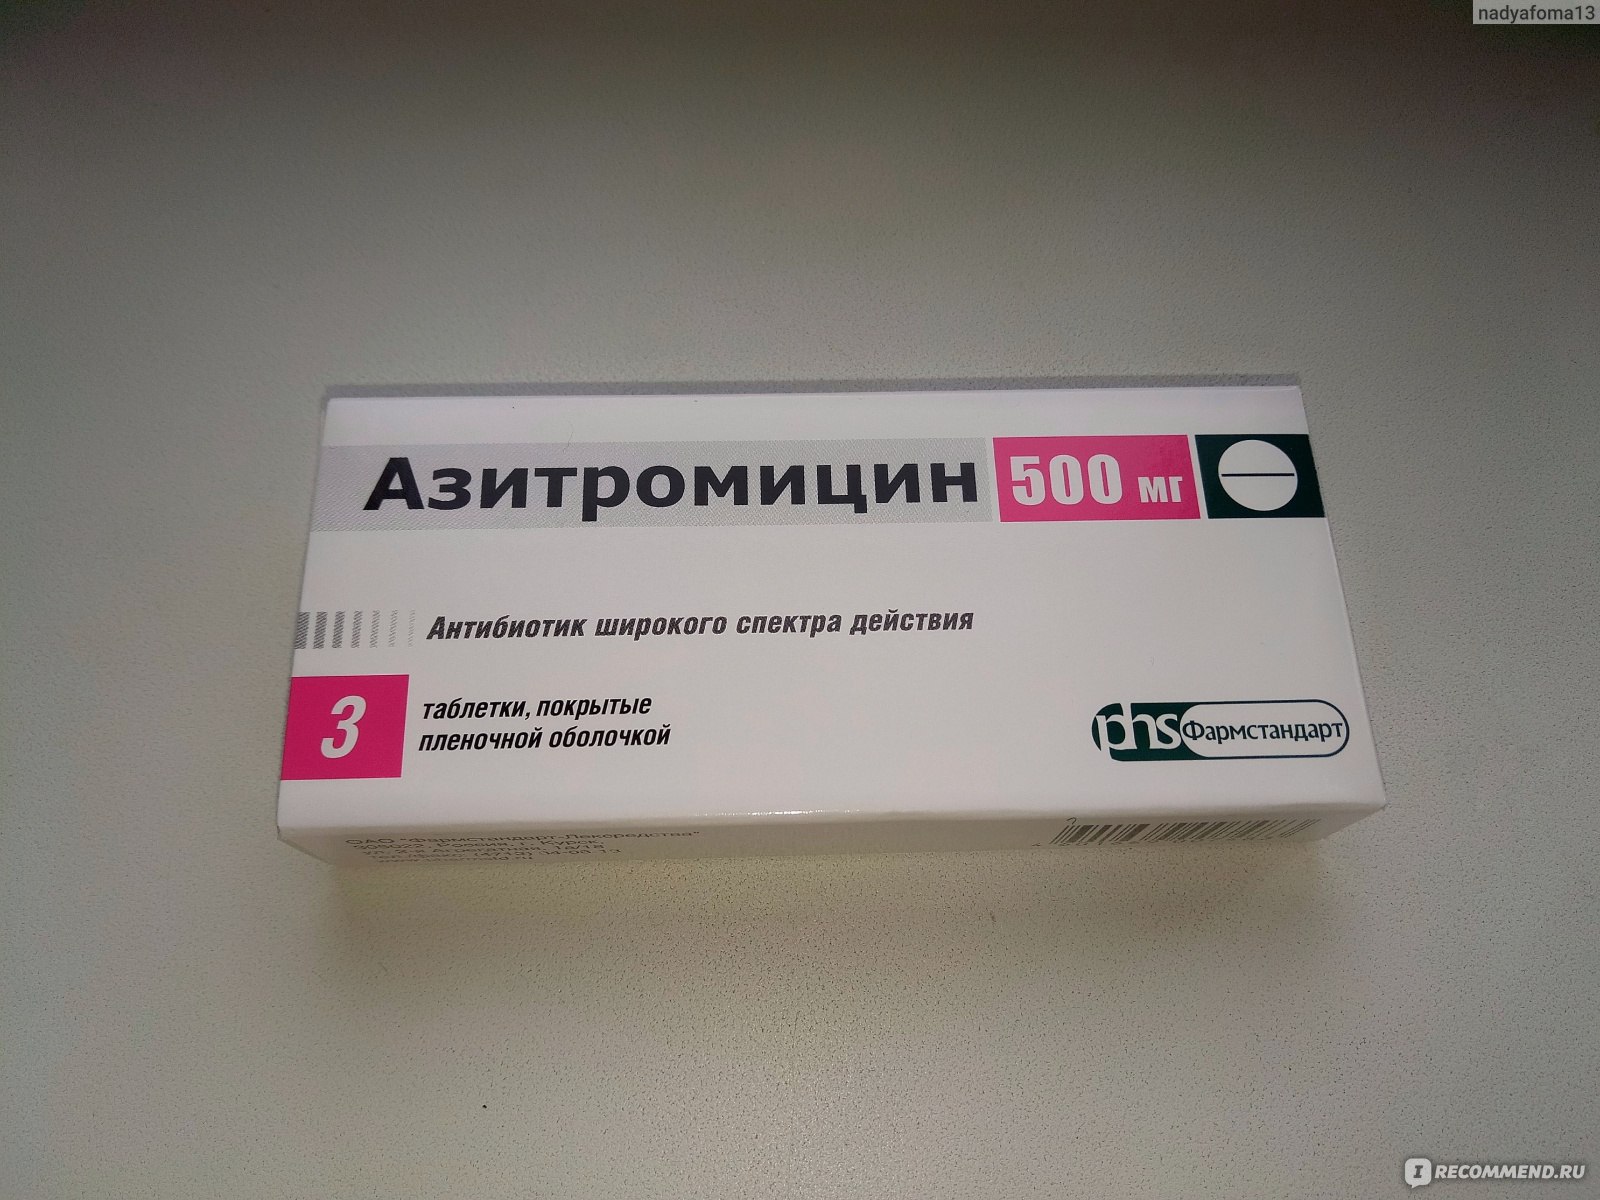 Антибиотики широкого спектра действия препараты. Антибиотик Азитромицин 500 мг. Азитромицин 500 мг Фармстандарт. Азитромицин 500 антибиотик широкого спектра. Азитромицин Фармстандарт Лексредства.